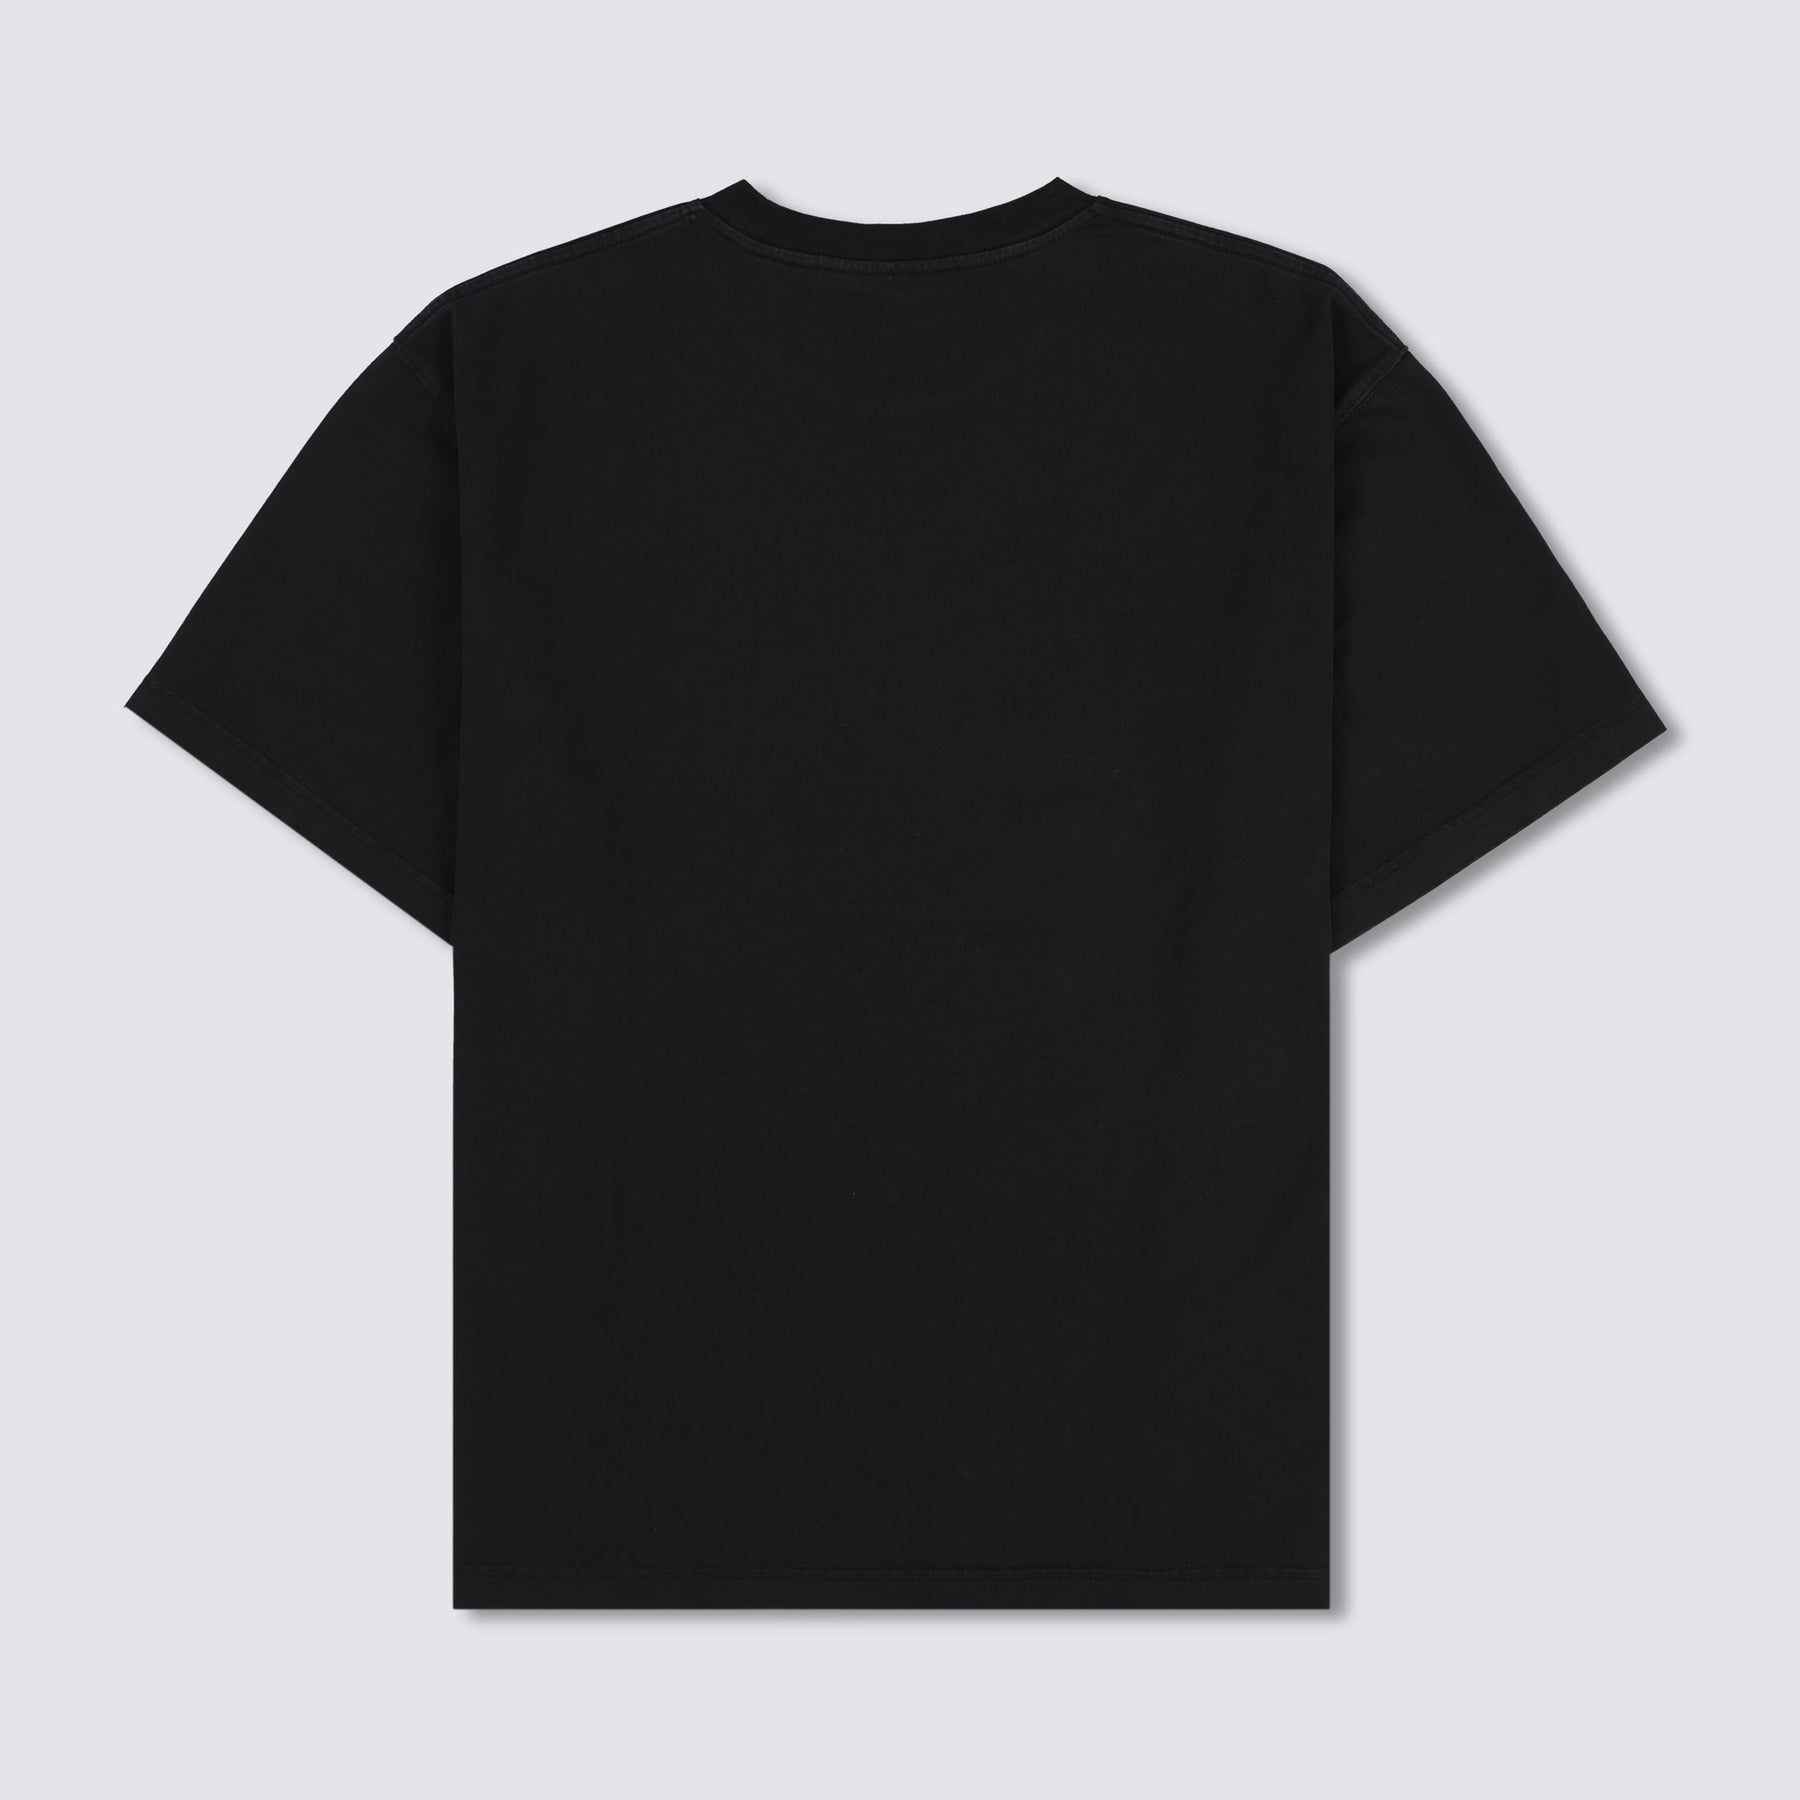 Waves Heavyweight Shirt in Black